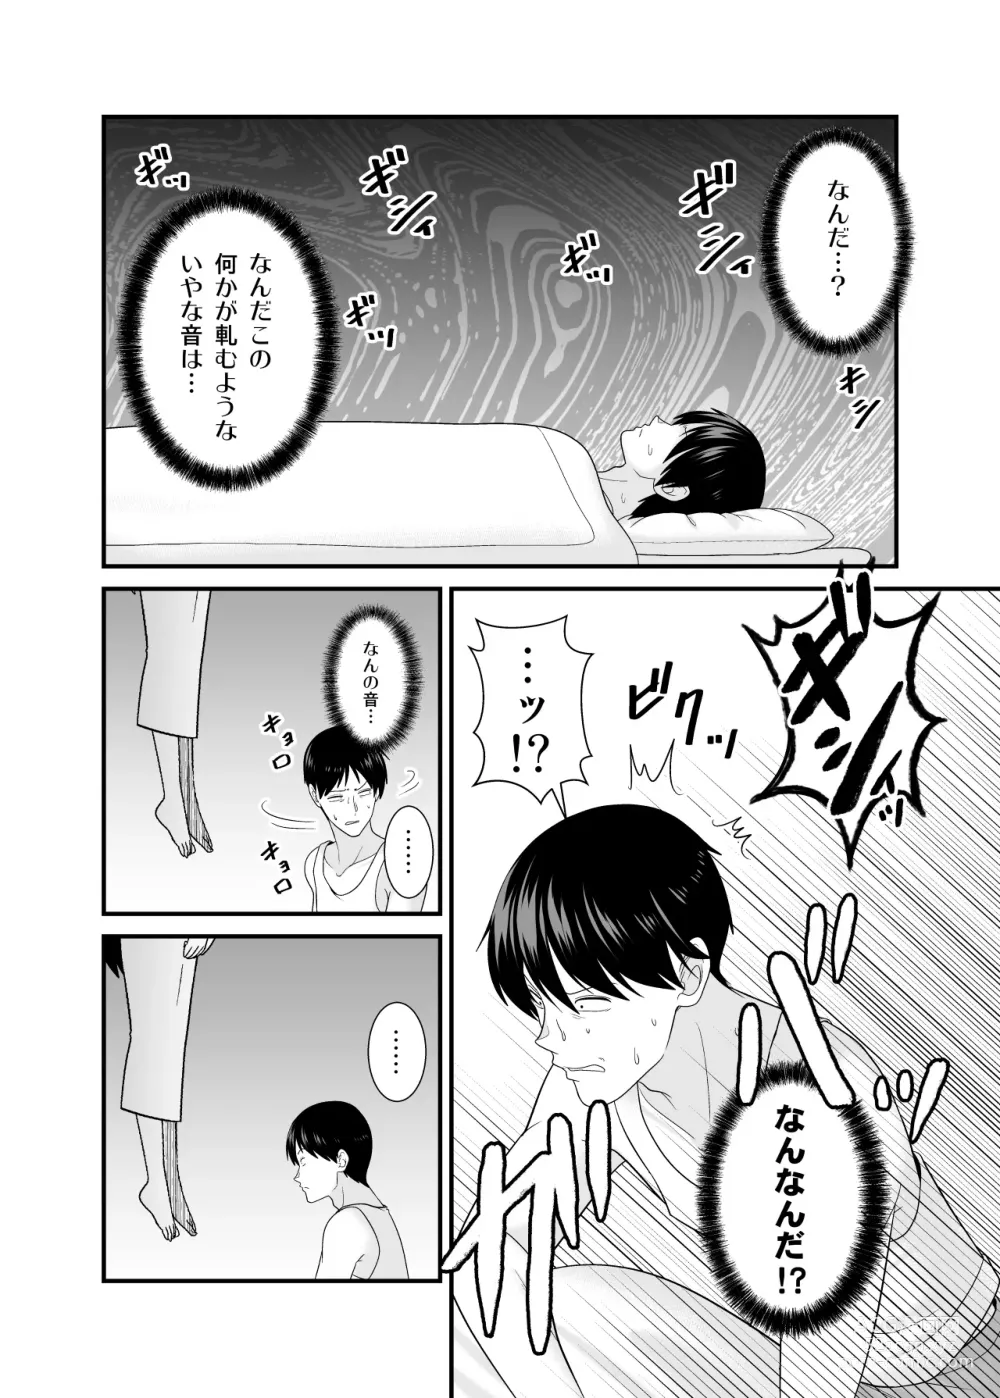 Page 7 of doujinshi ヤバい事故物件に女幽霊が出たけど無職底辺の俺はセックスしまくる